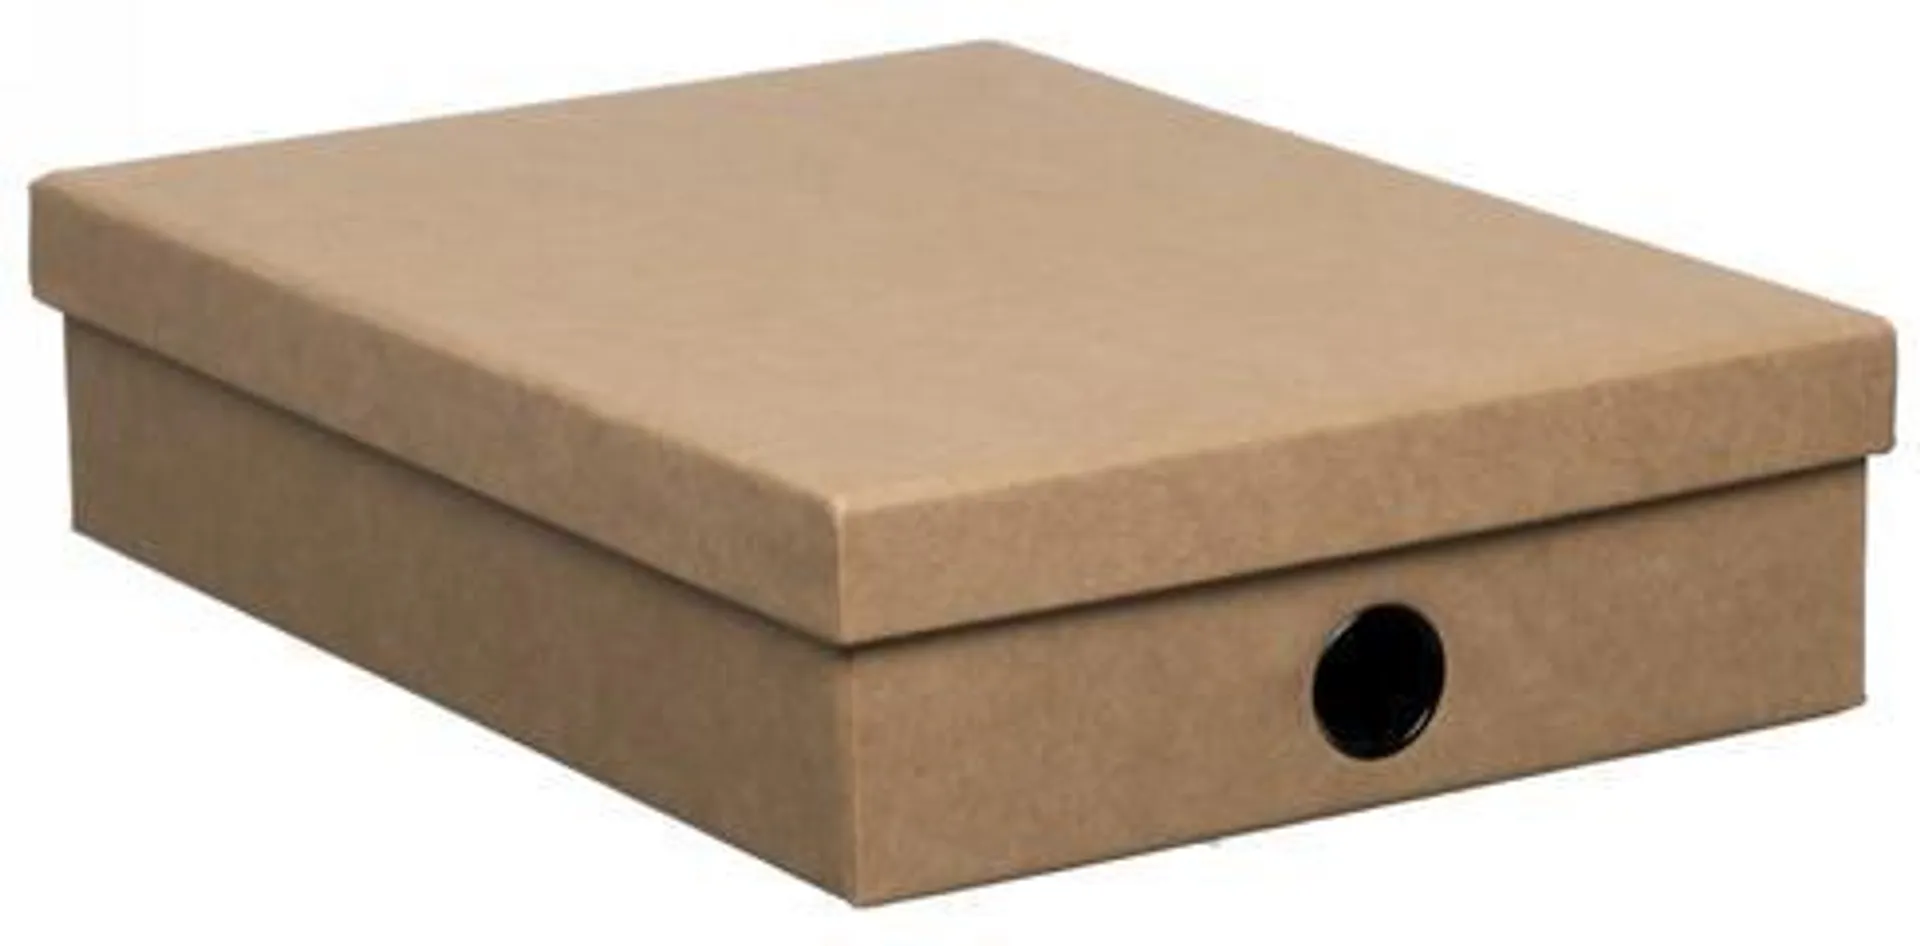 WHSmith Simple Style Brown Kraft Document Box